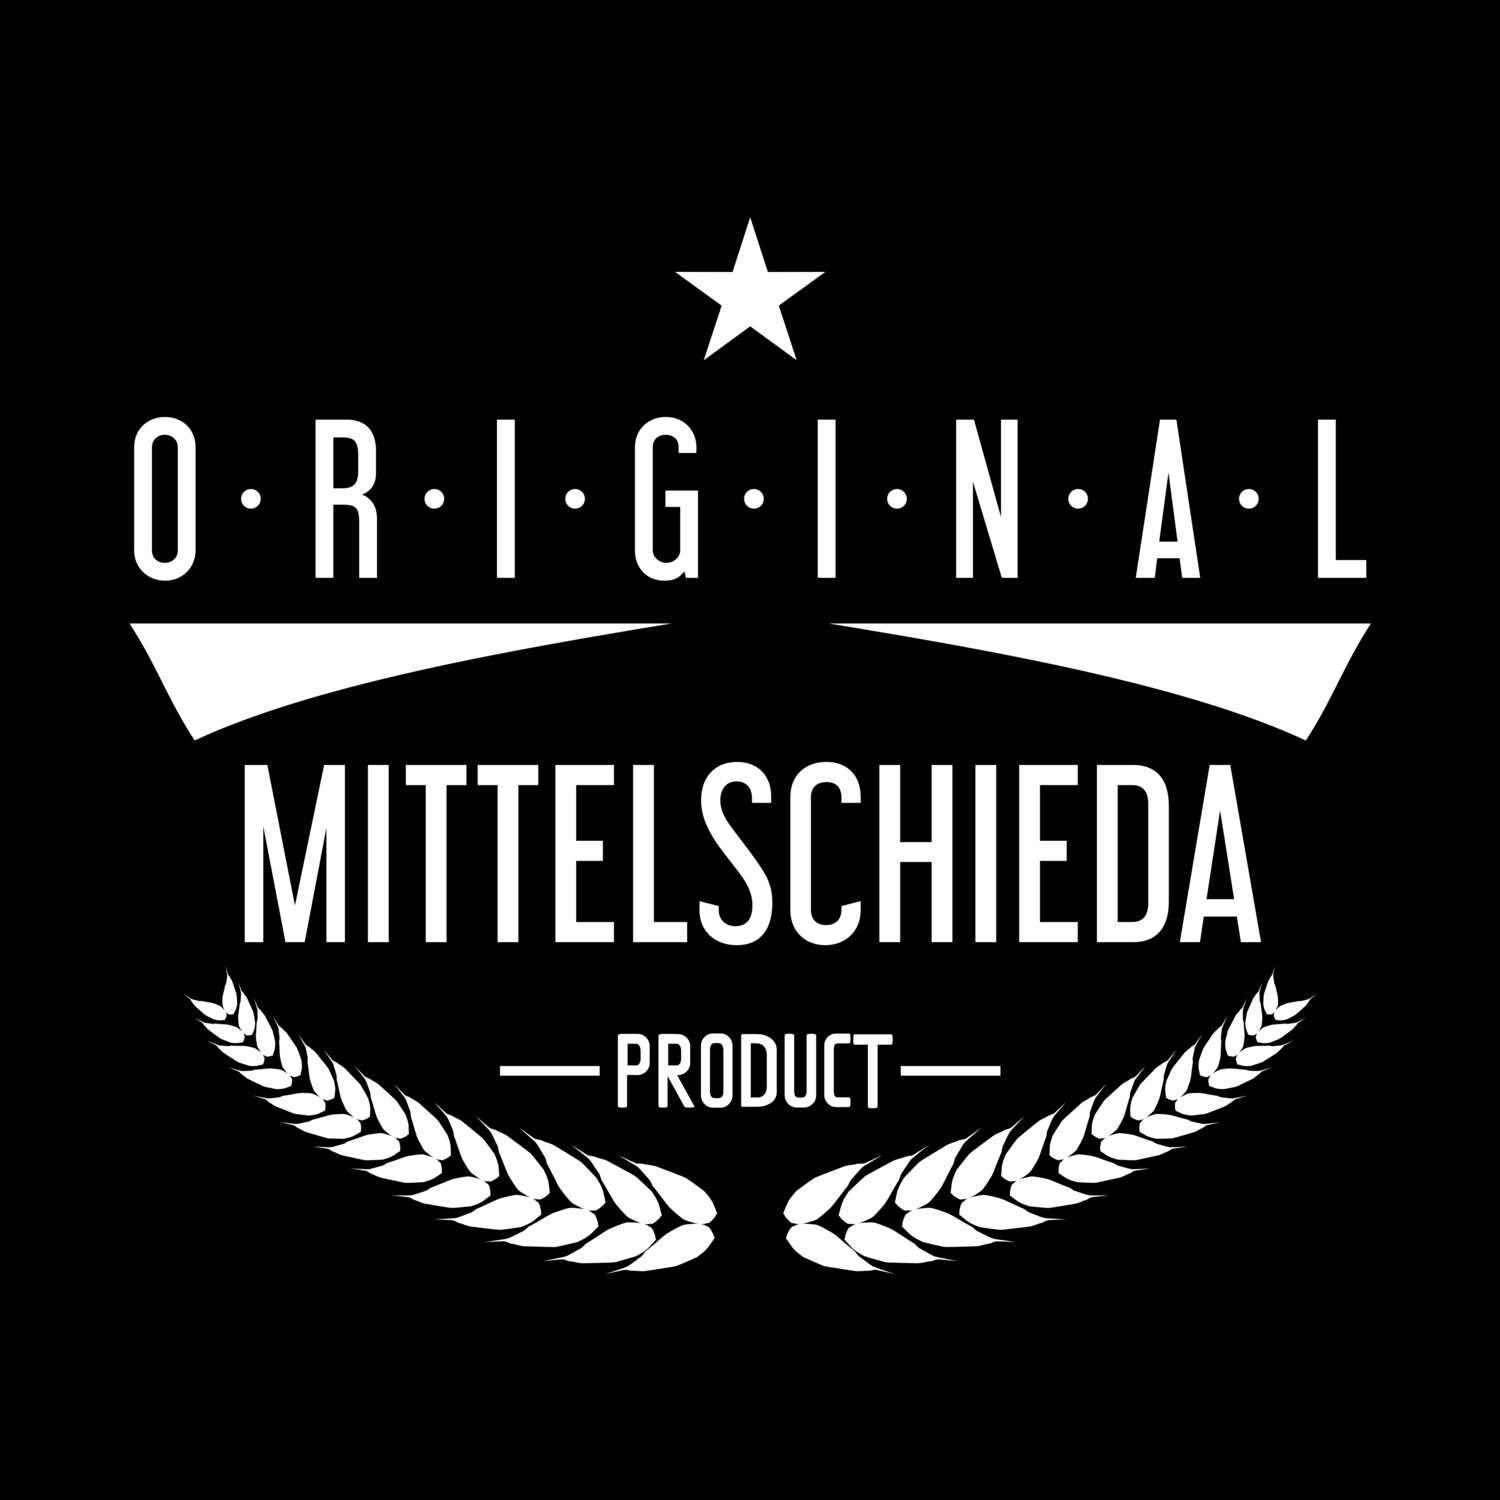 Mittelschieda T-Shirt »Original Product«